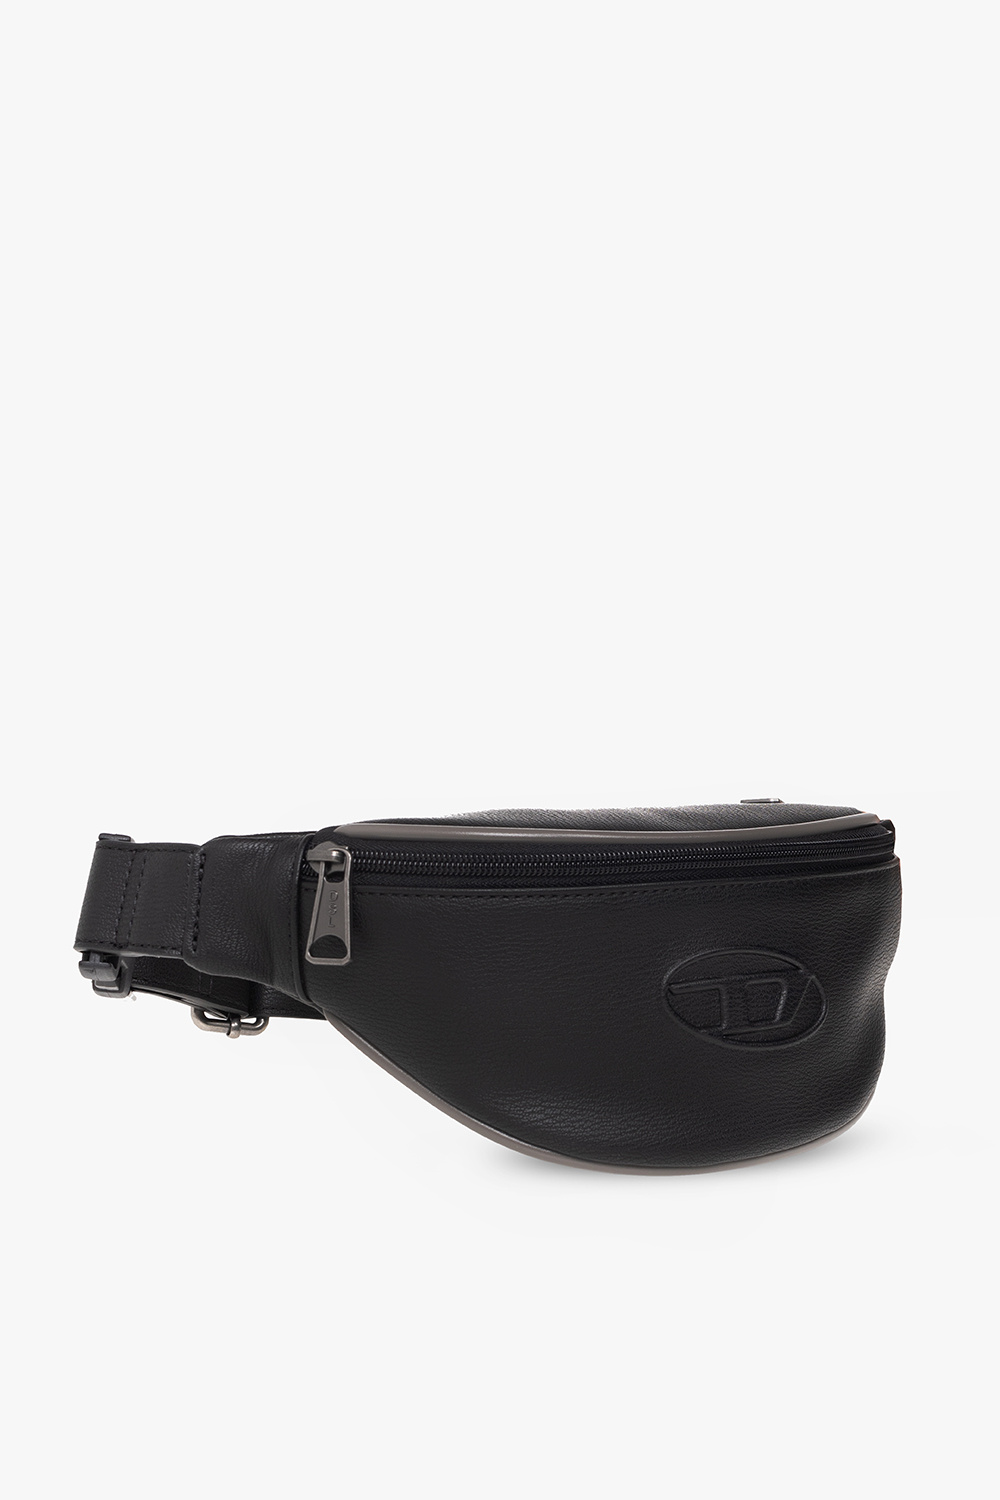 Diesel 'D. 90' belt bag | Men's Bags | Vitkac